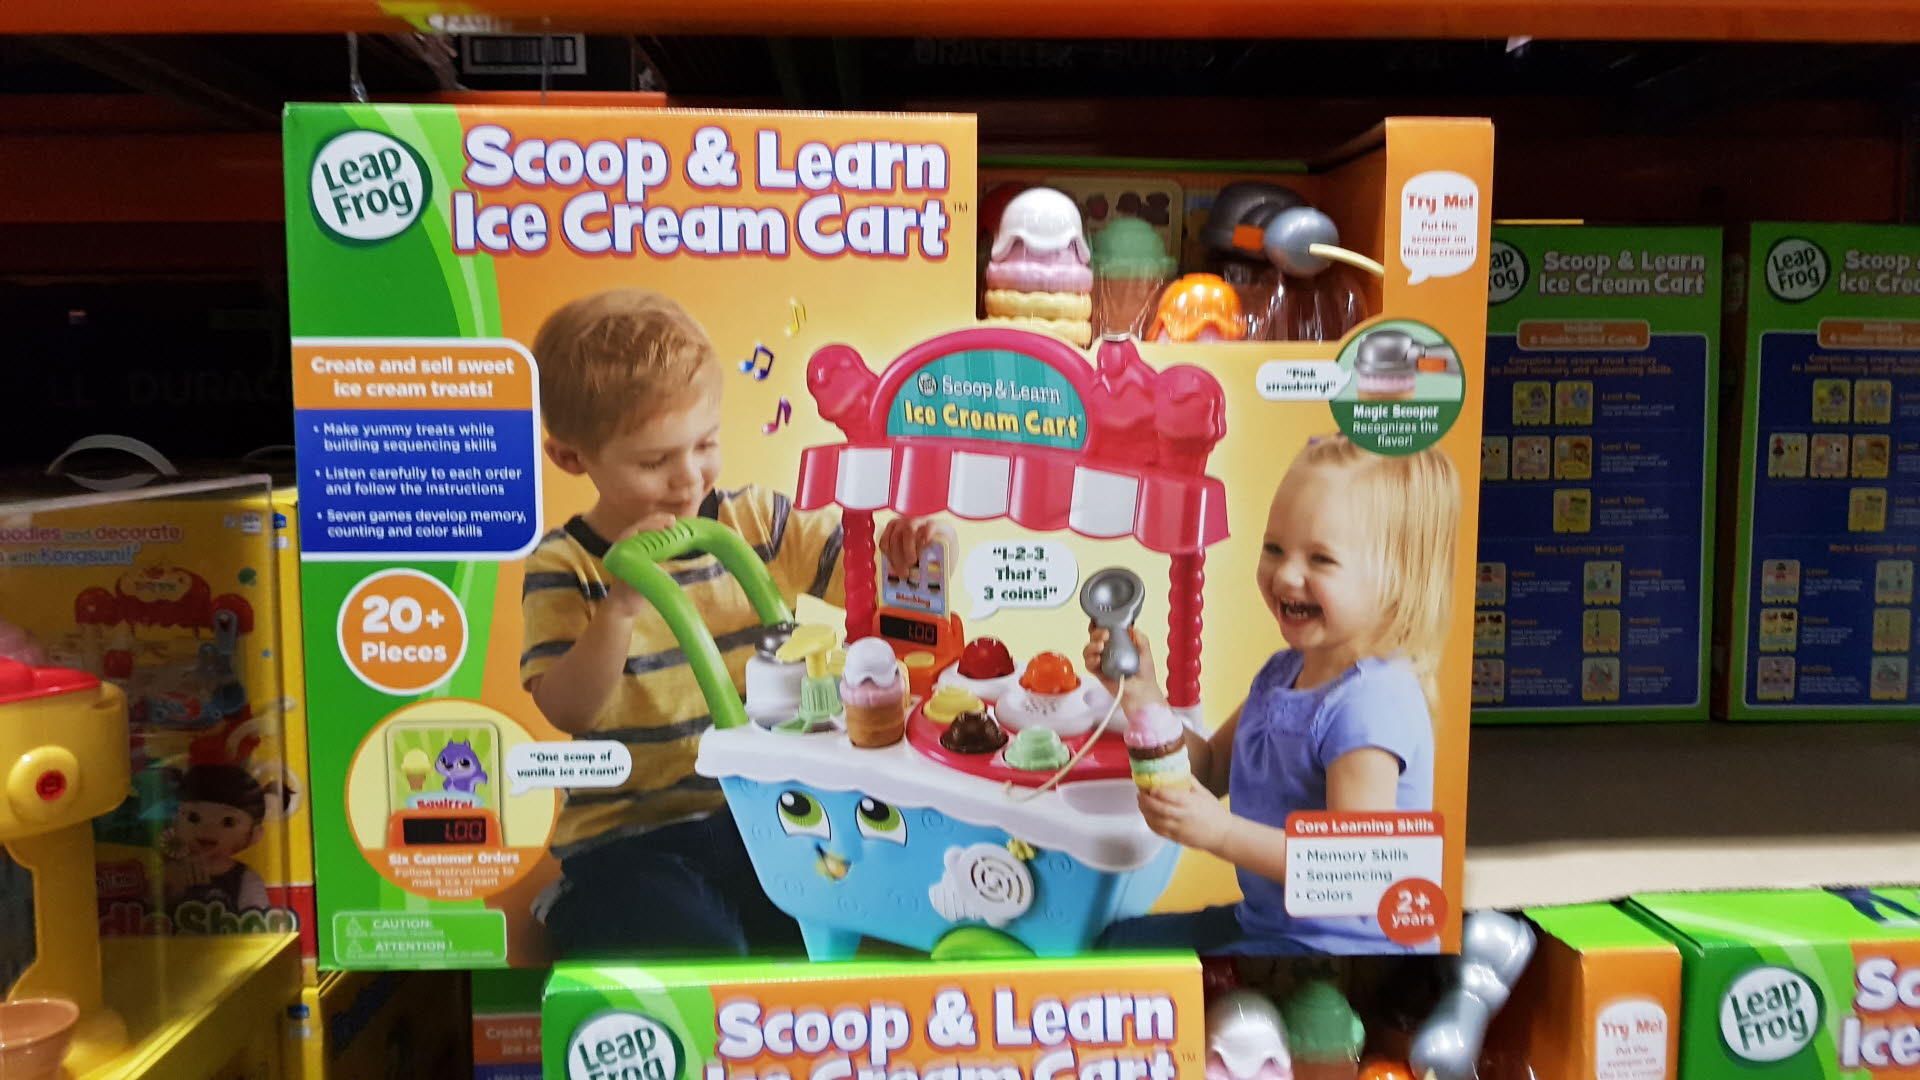 LEAPFROG
아이스크림카트
영어버전
LEAPFROG ICE CREAM CART